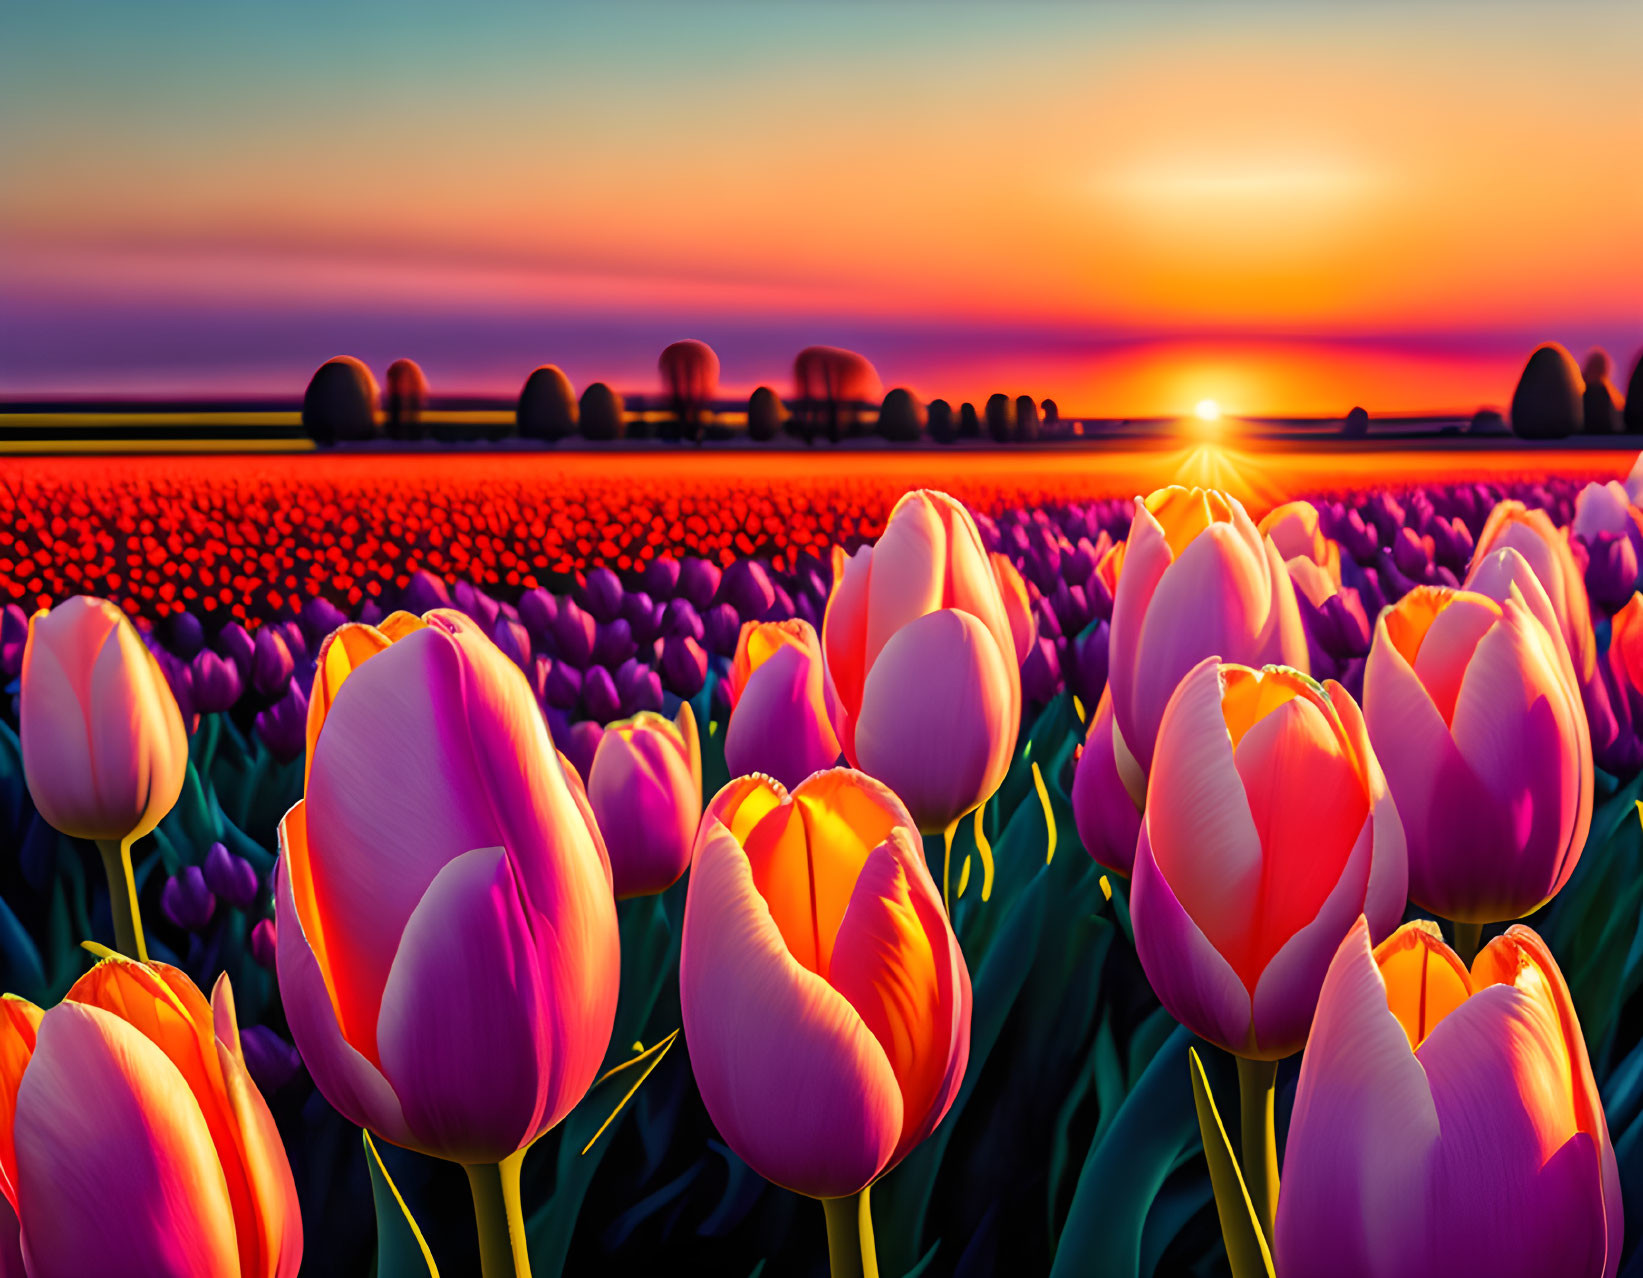 Sunset Over Tulips